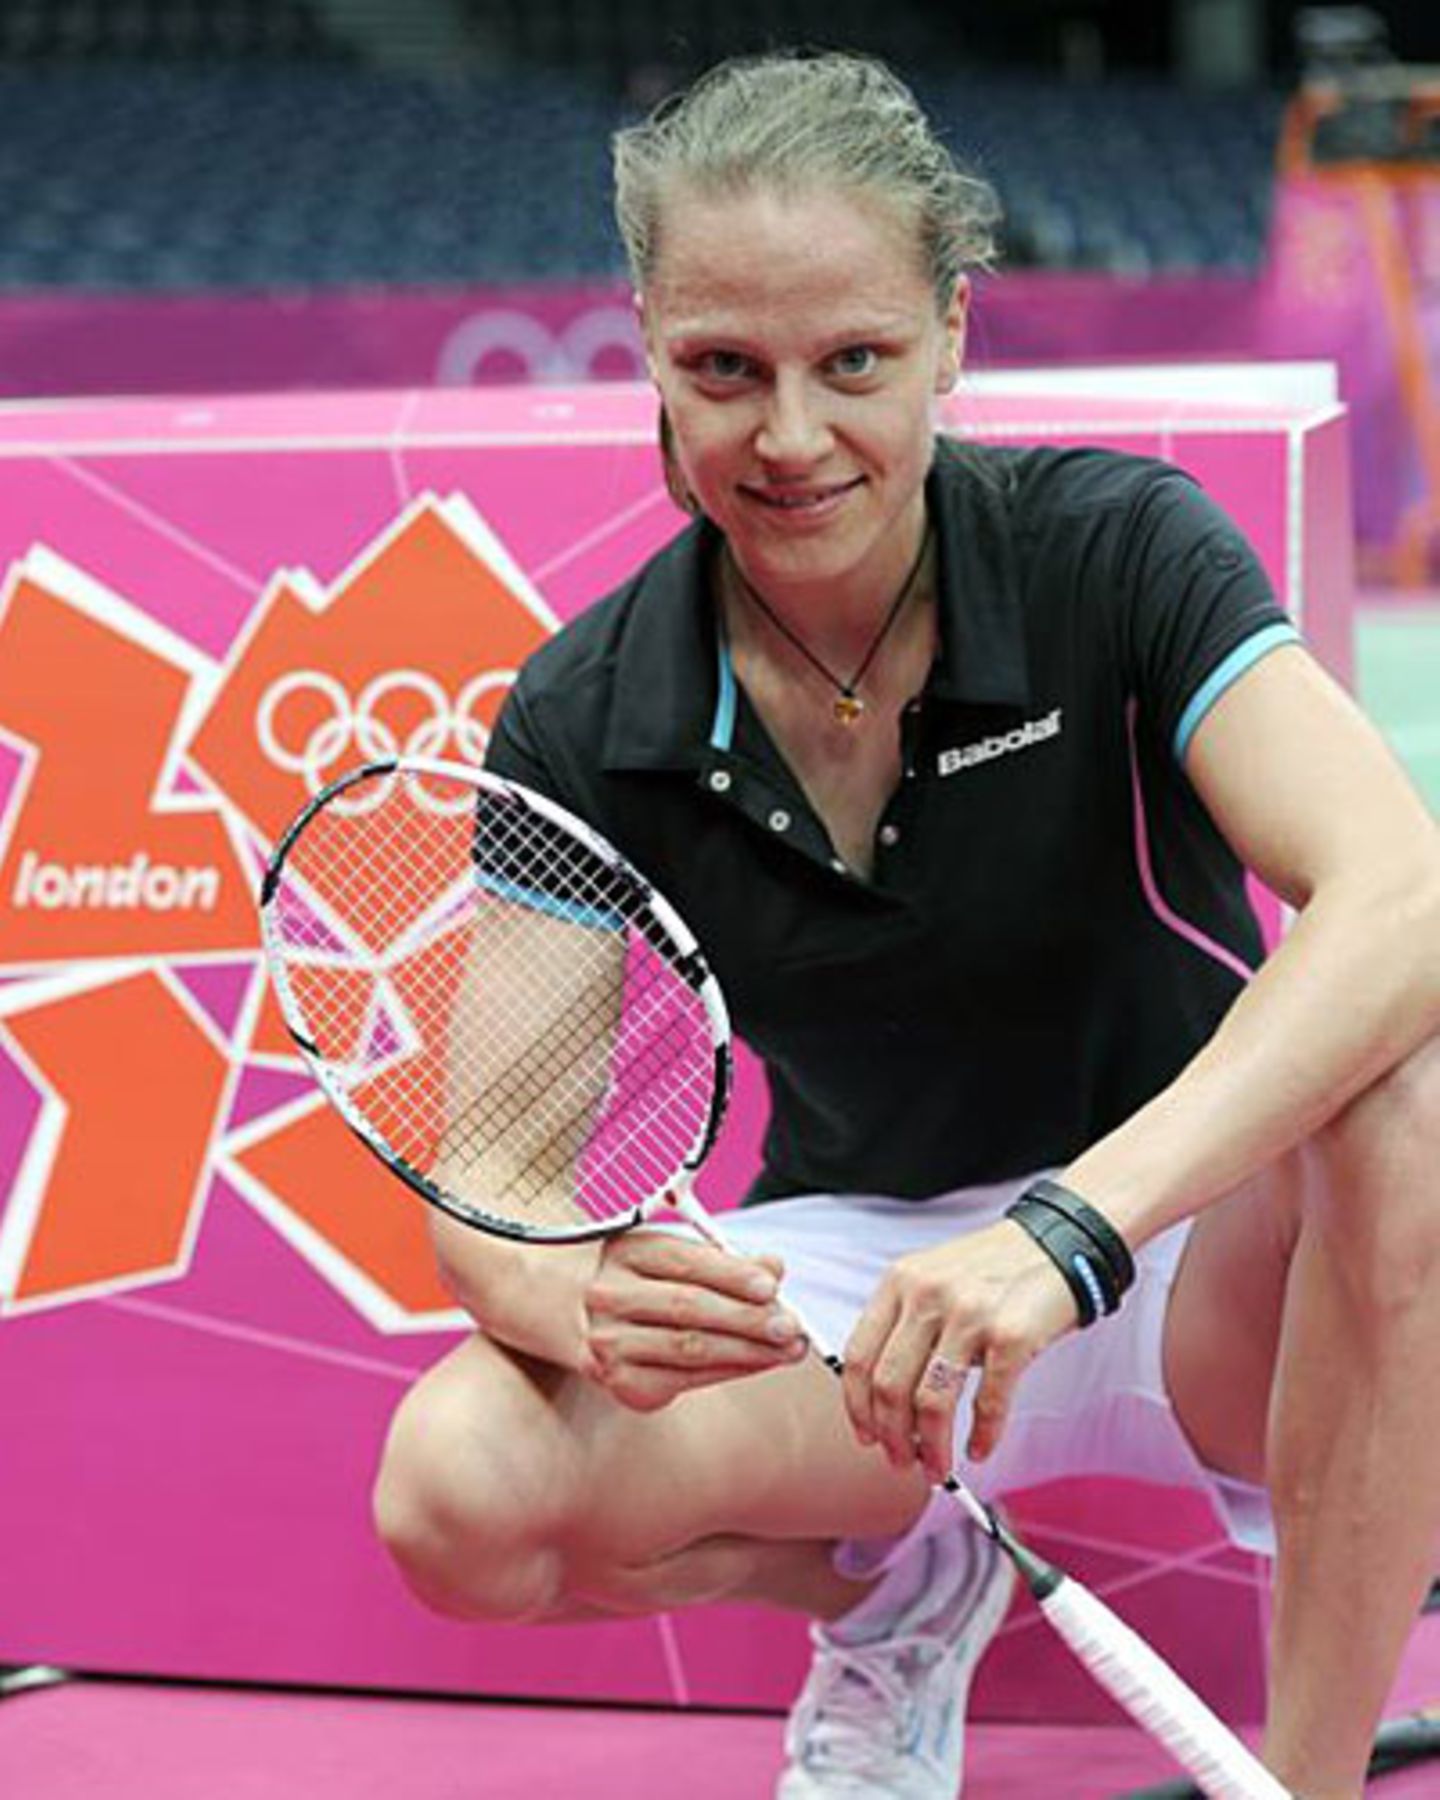 Badminton-Spielerin Juliane Schenk